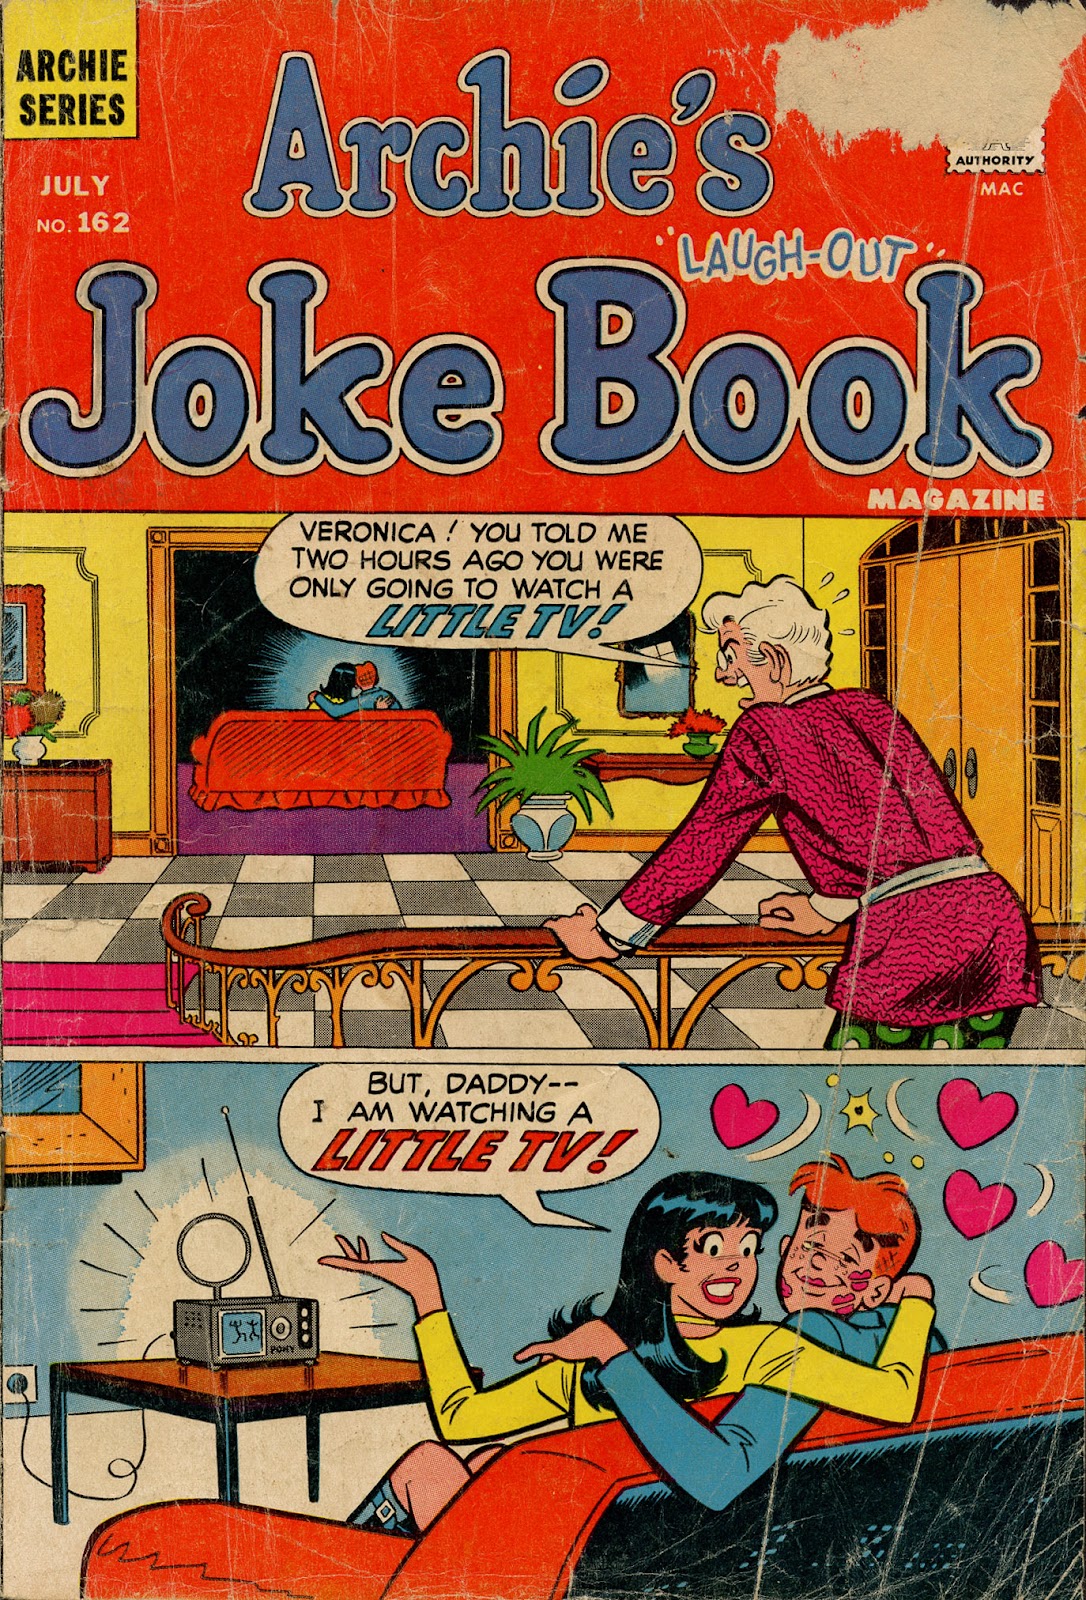 Archie's Joke Book Magazine issue 162 - Page 1